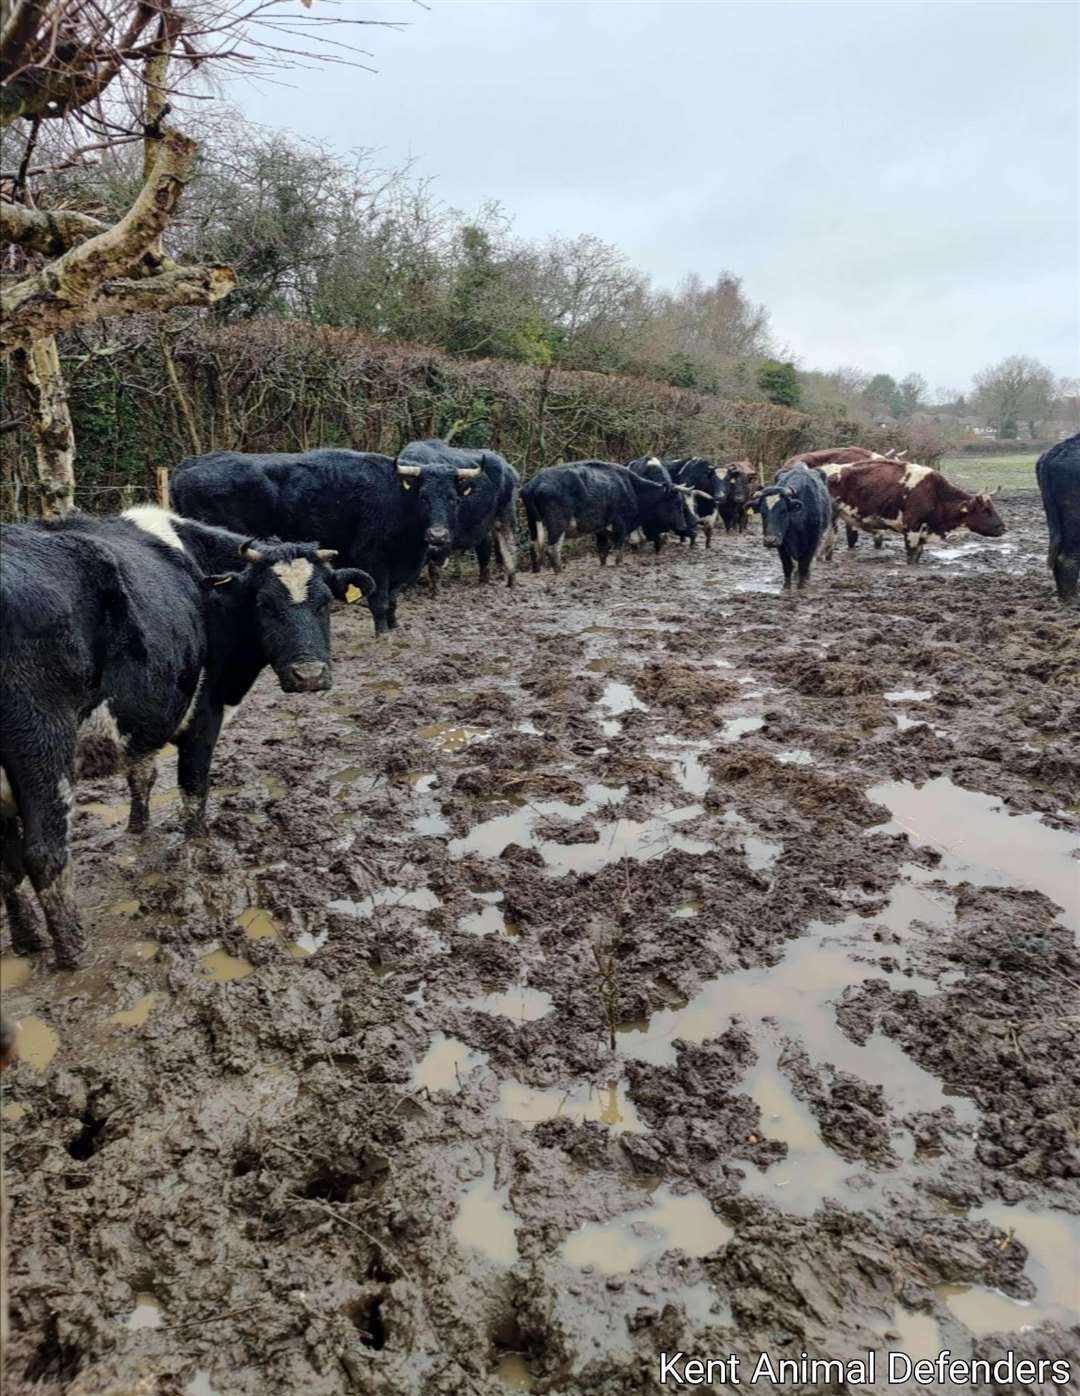 Cattle at Oaks Farm near Sevenoaks